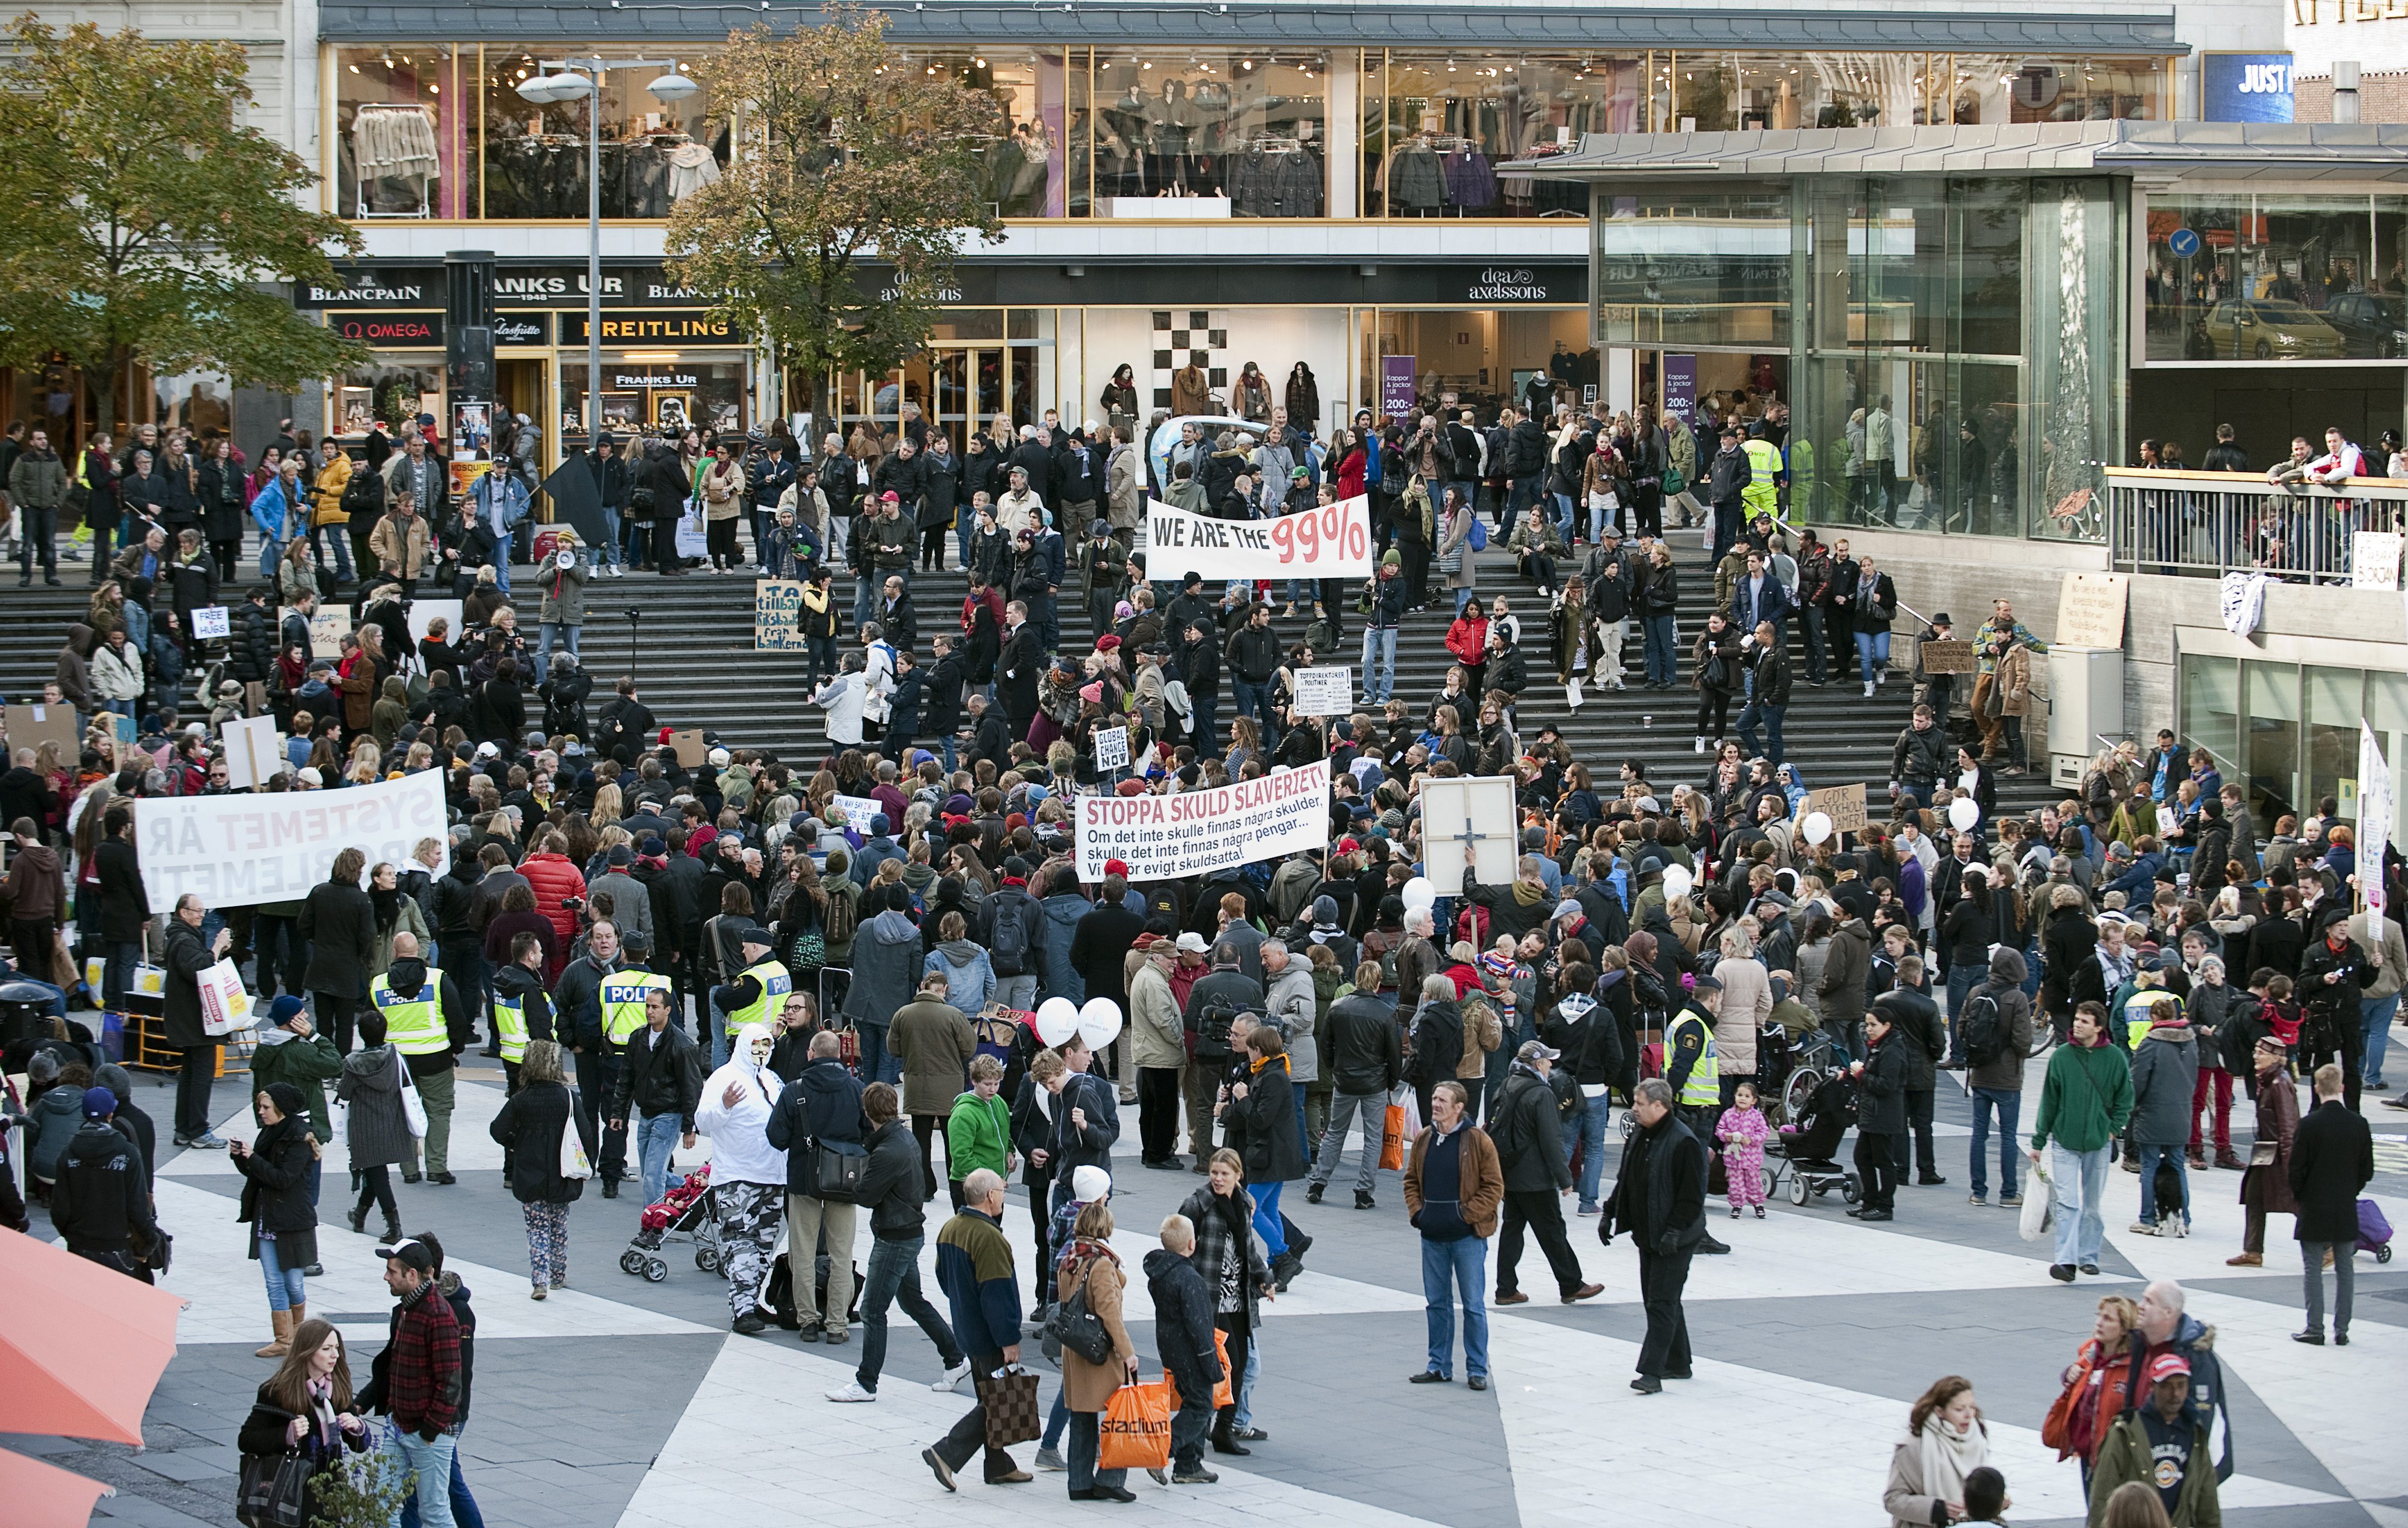 Sergels Torg, Demonstration, Protester, Occupy Wall Street, Wall Street, USA, Ekonomi, Occupy Stockholm, Politik, Occupy